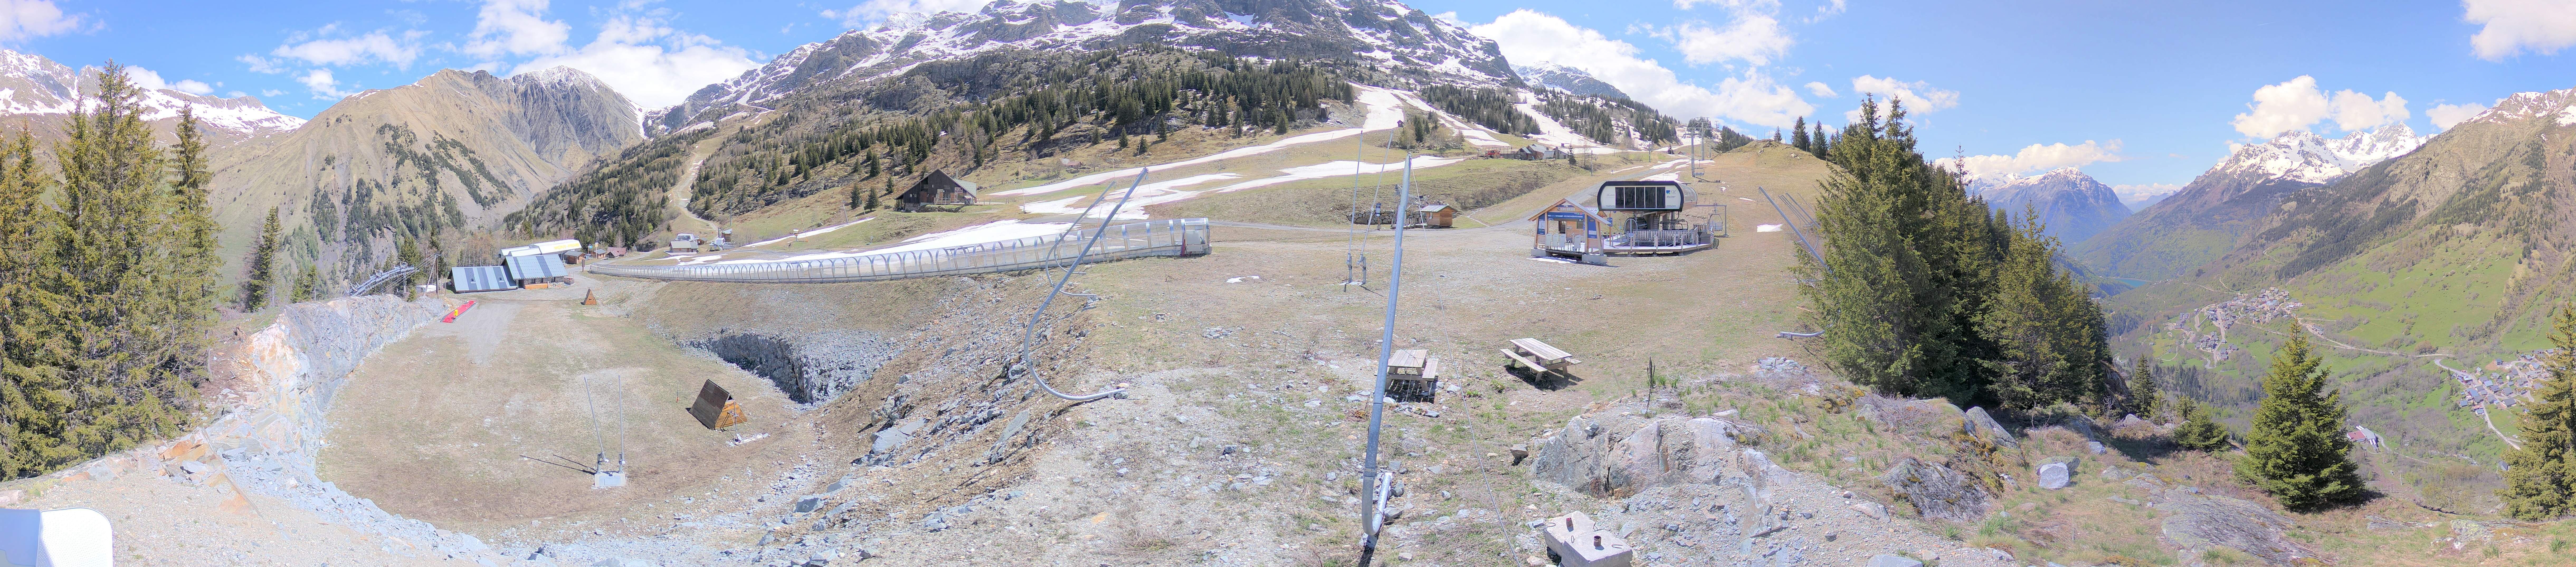 Webcam Alpe d'Huez